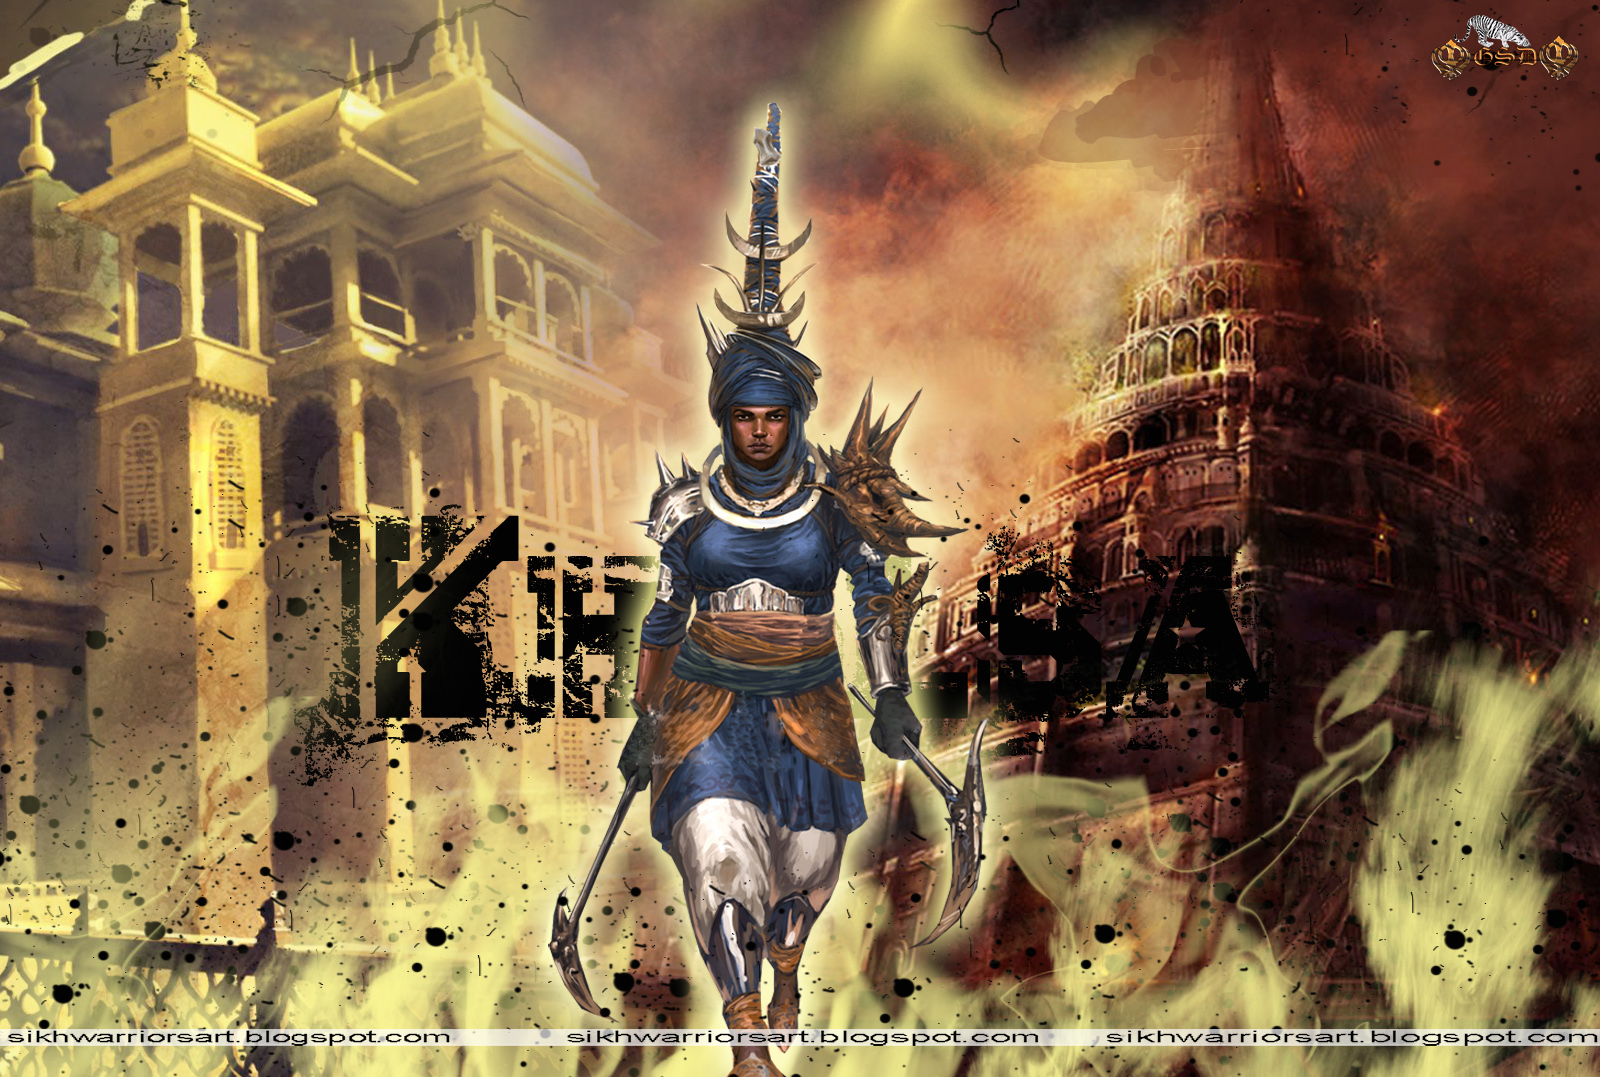 sikh warrior wallpaper,action adventure game,cg artwork,strategy video game,mythology,adventure game